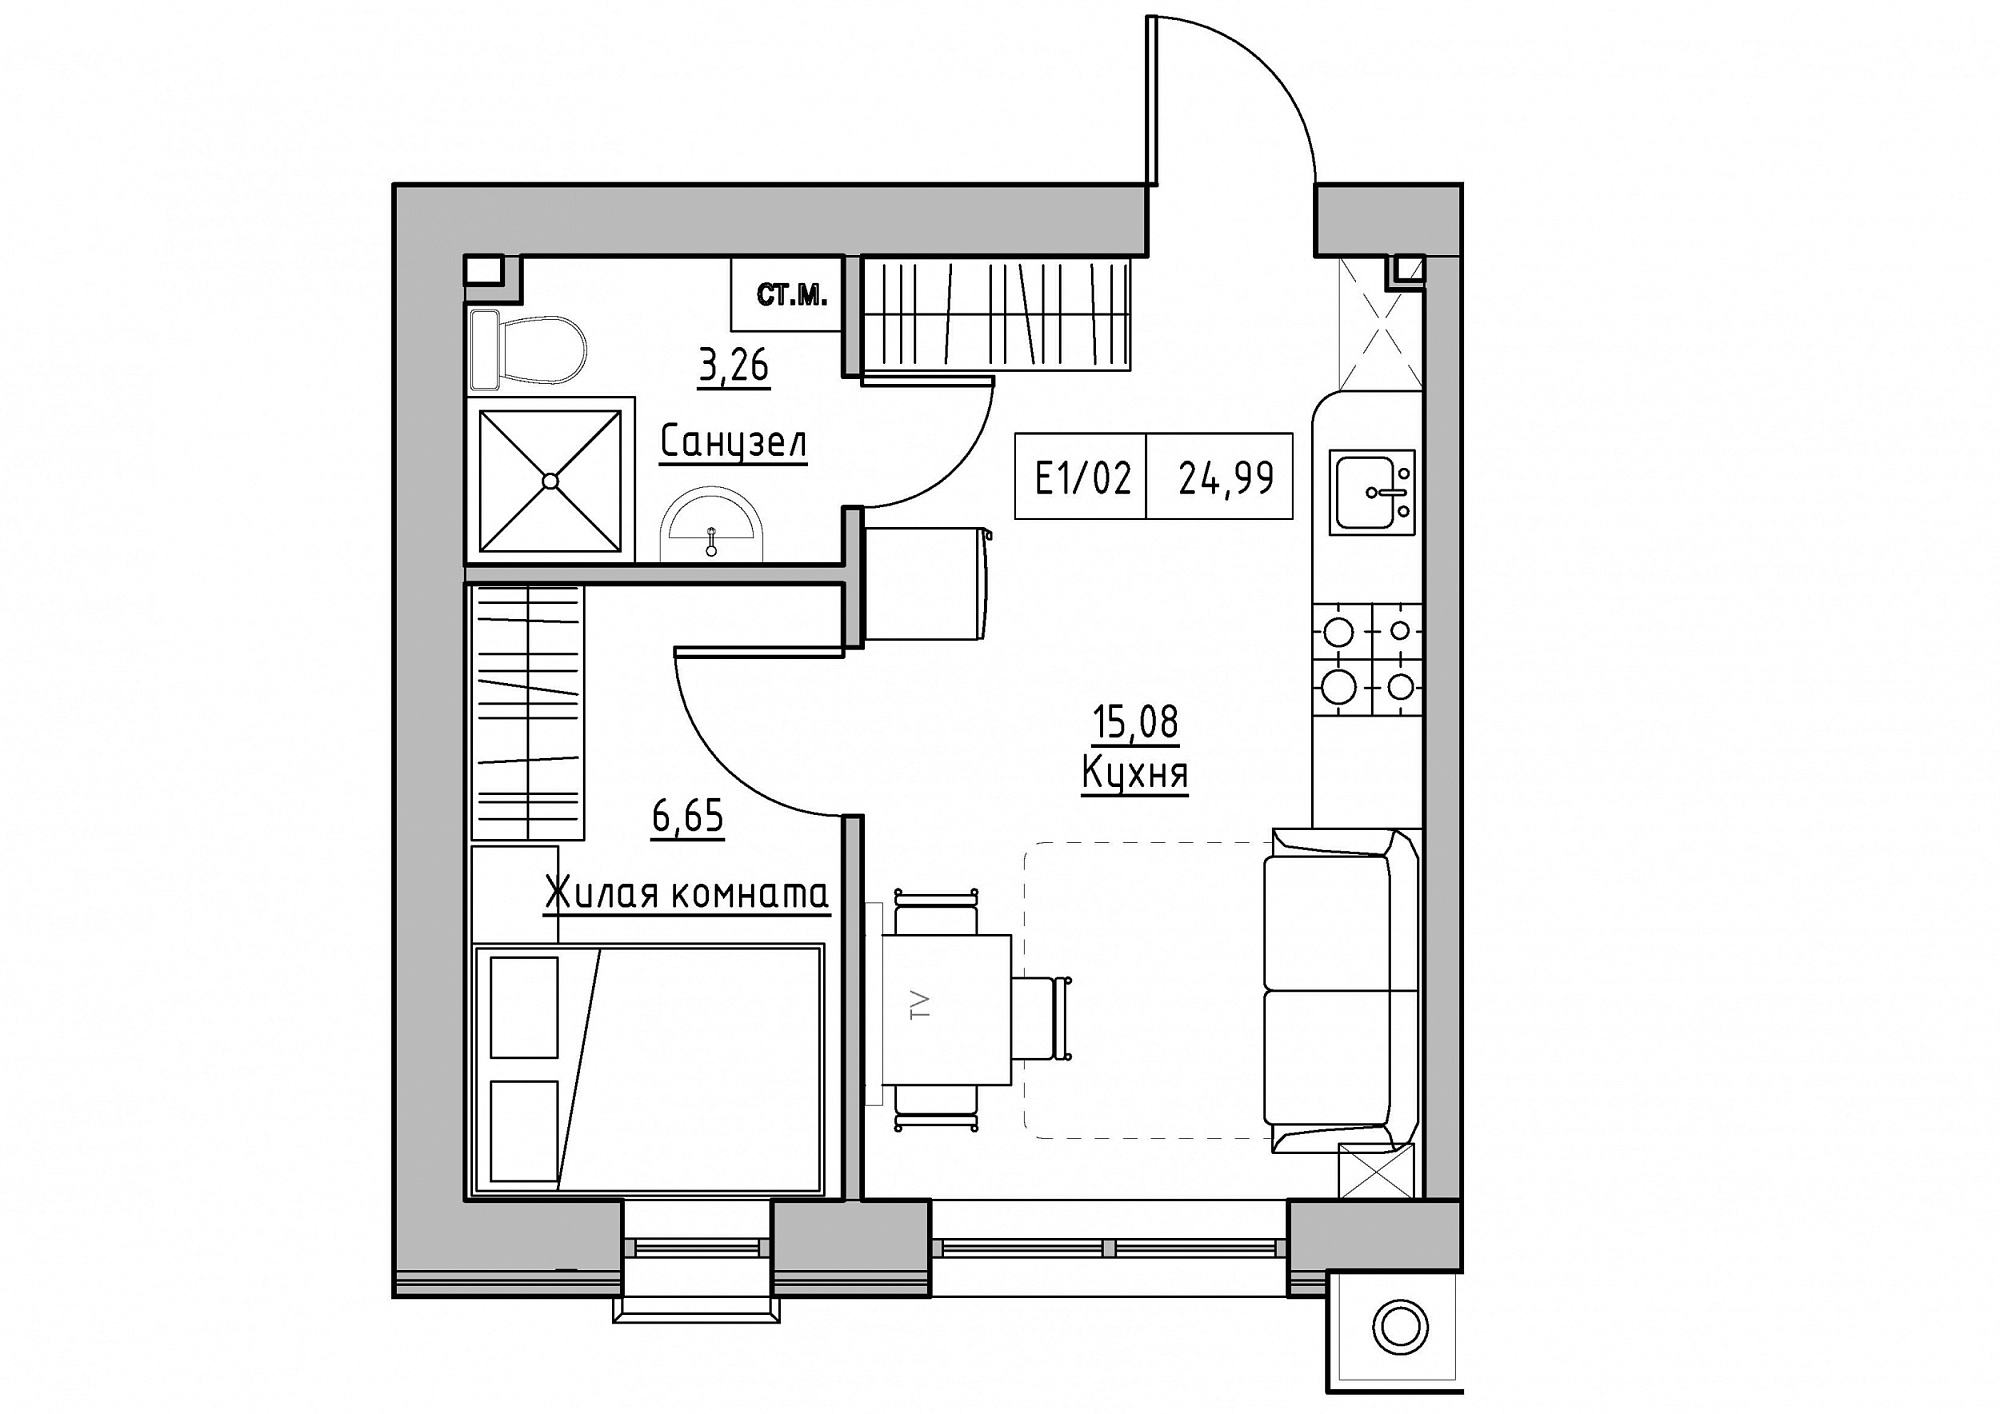 Planning 1-rm flats area 24.99m2, KS-011-05/0015.